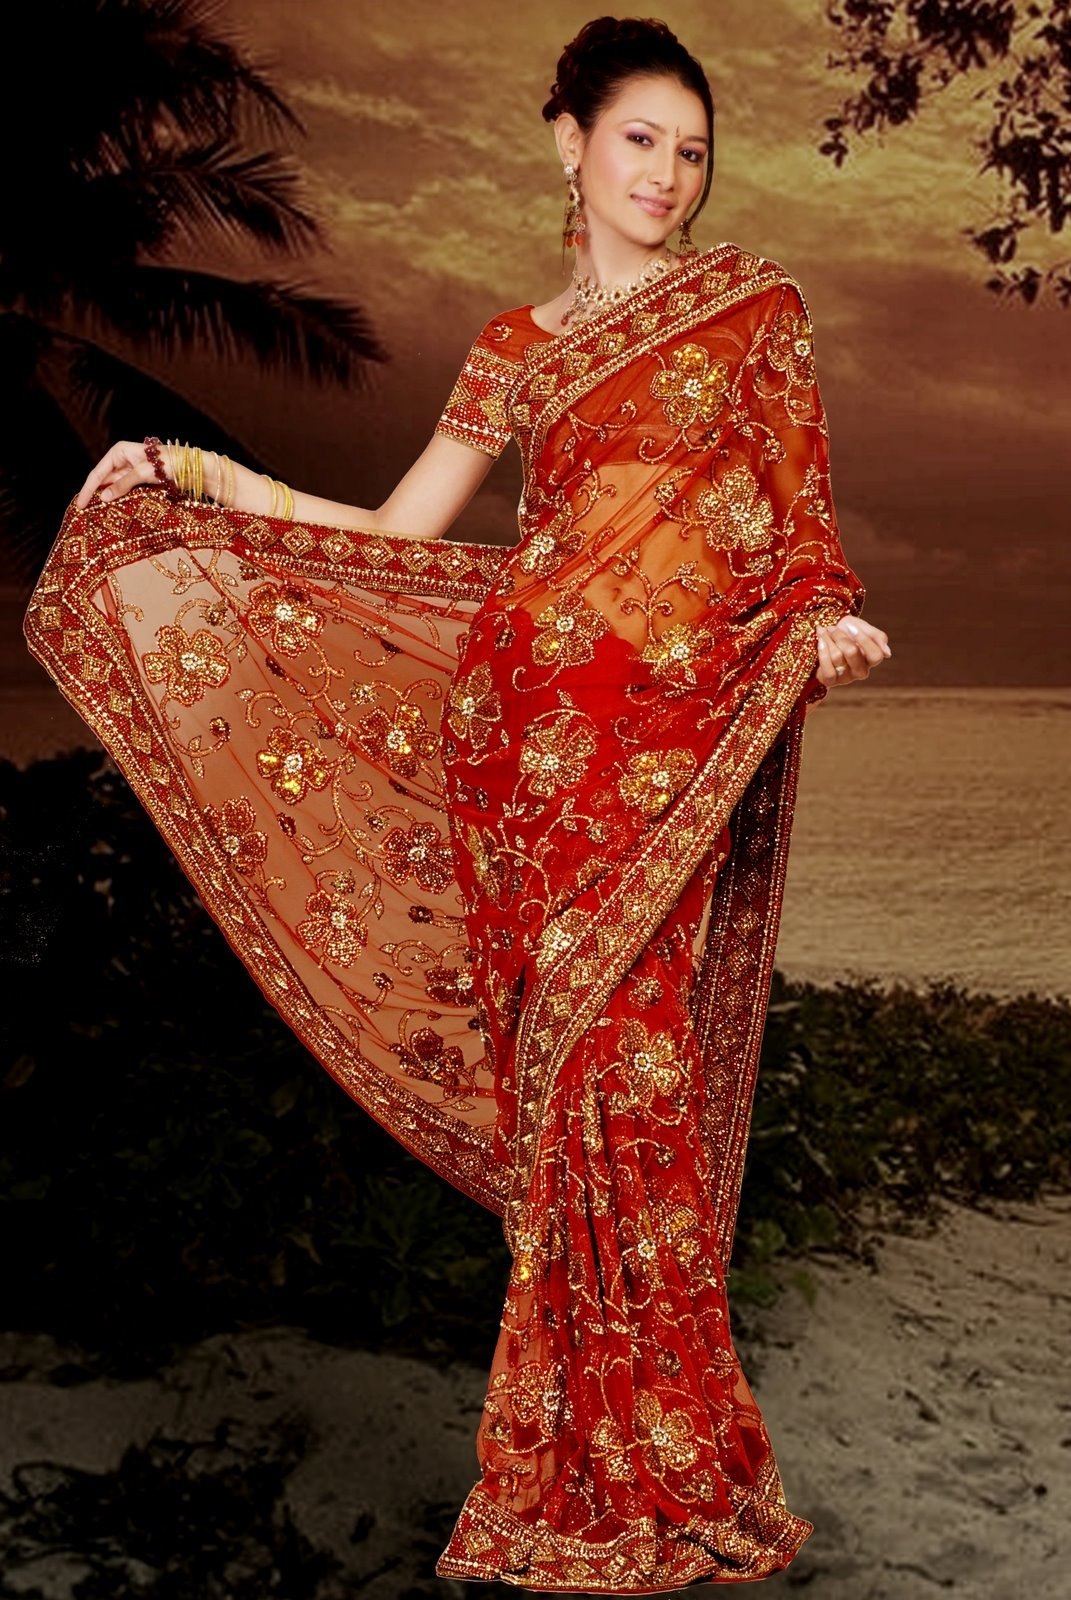 Иди сари сол. Сари Индия. Сари индийская одежда. Сари (женская одежда в Индии). Национальная одежда Индии Сари.